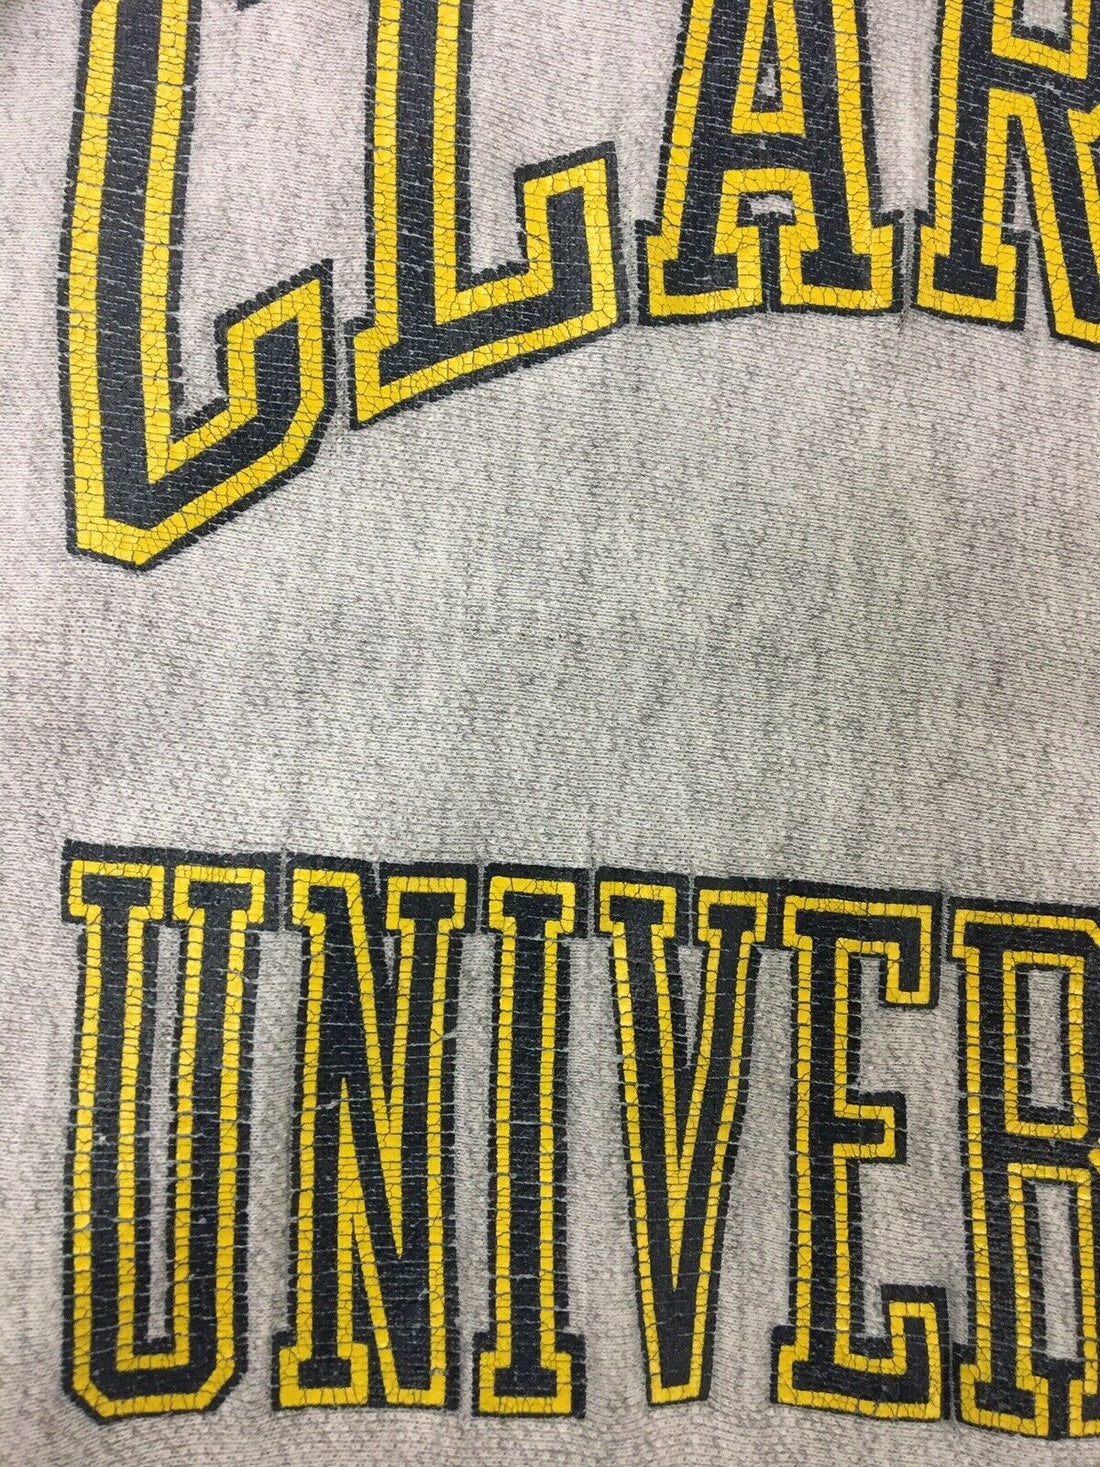 Vintage Clarion Golden Eagles Sweatshirt Crewneck Size Large NCAA